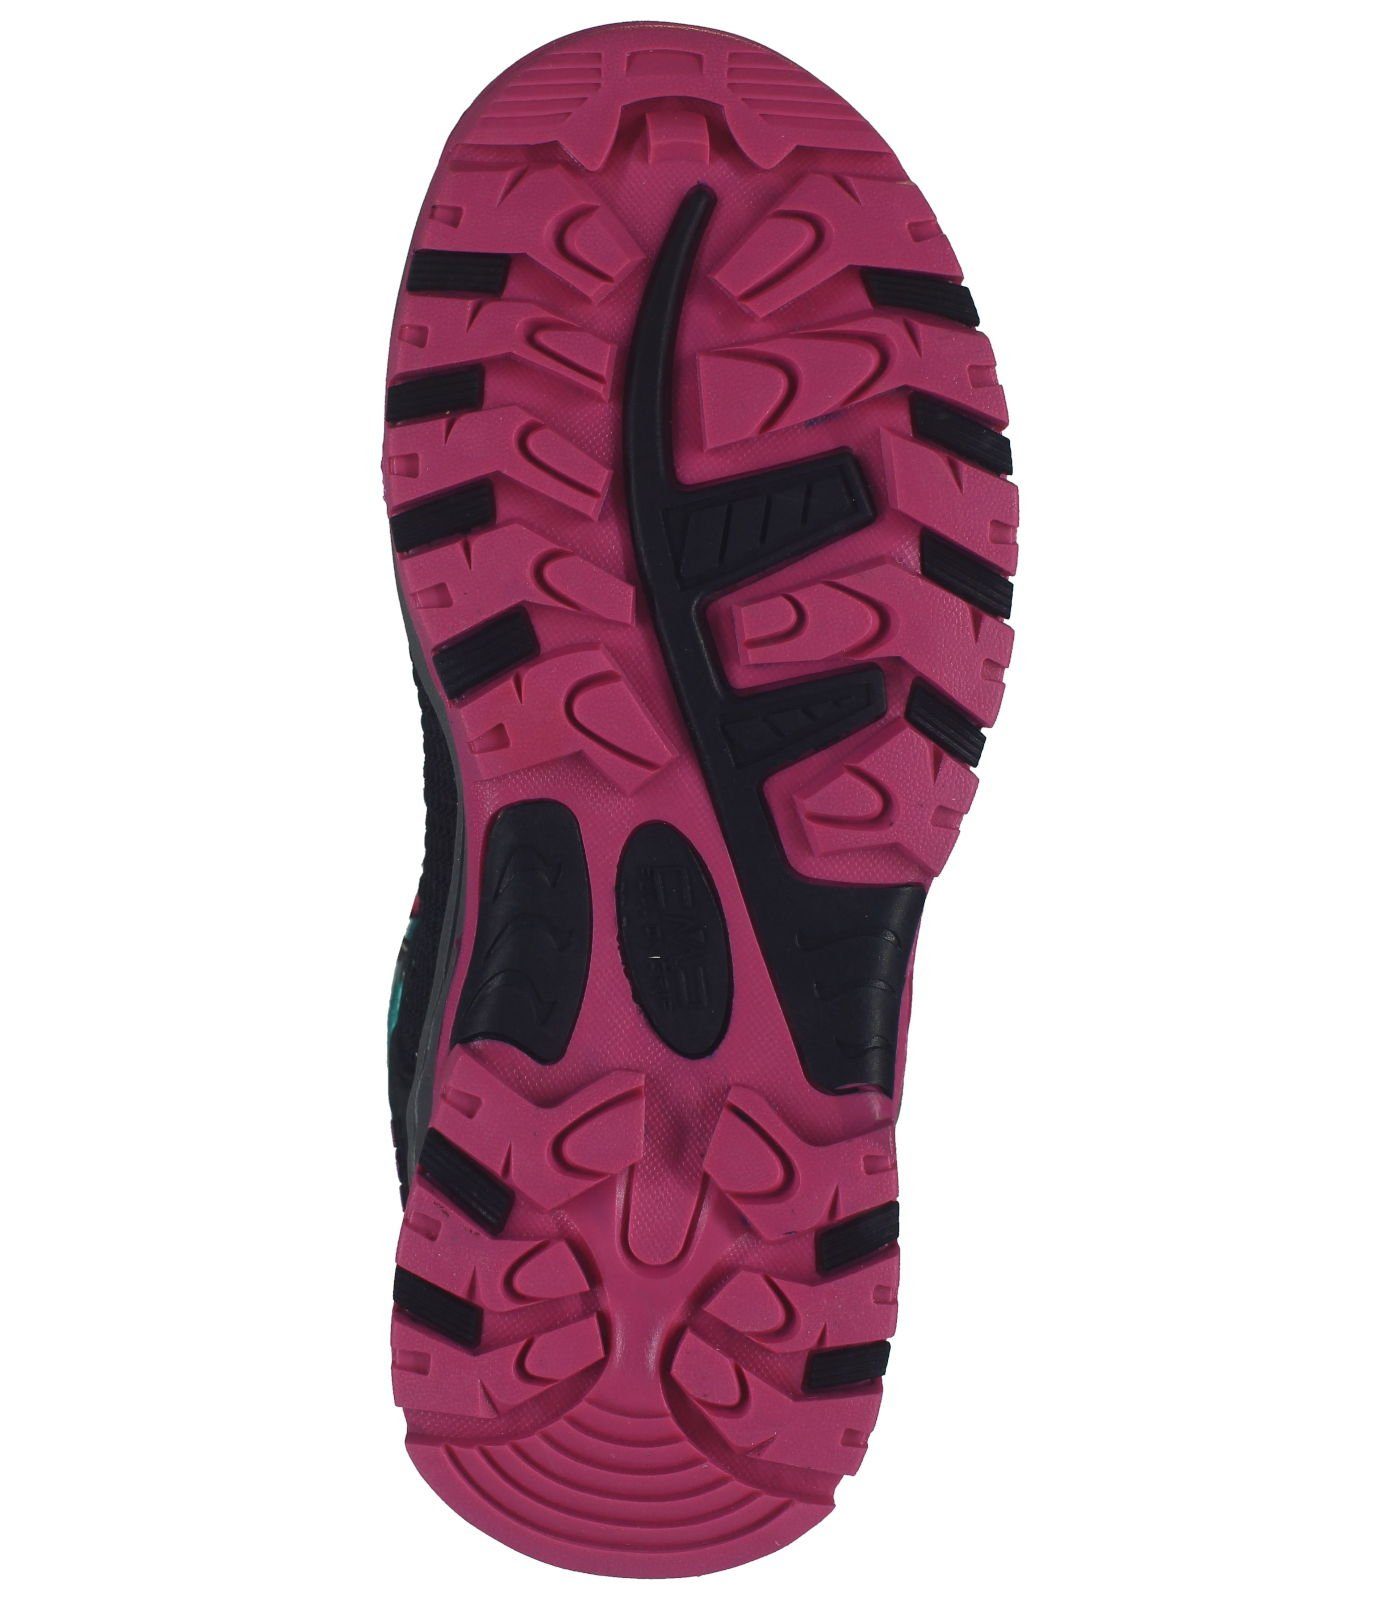 Winterstiefel Pink Schwarz CMP Leder/Textil Boots